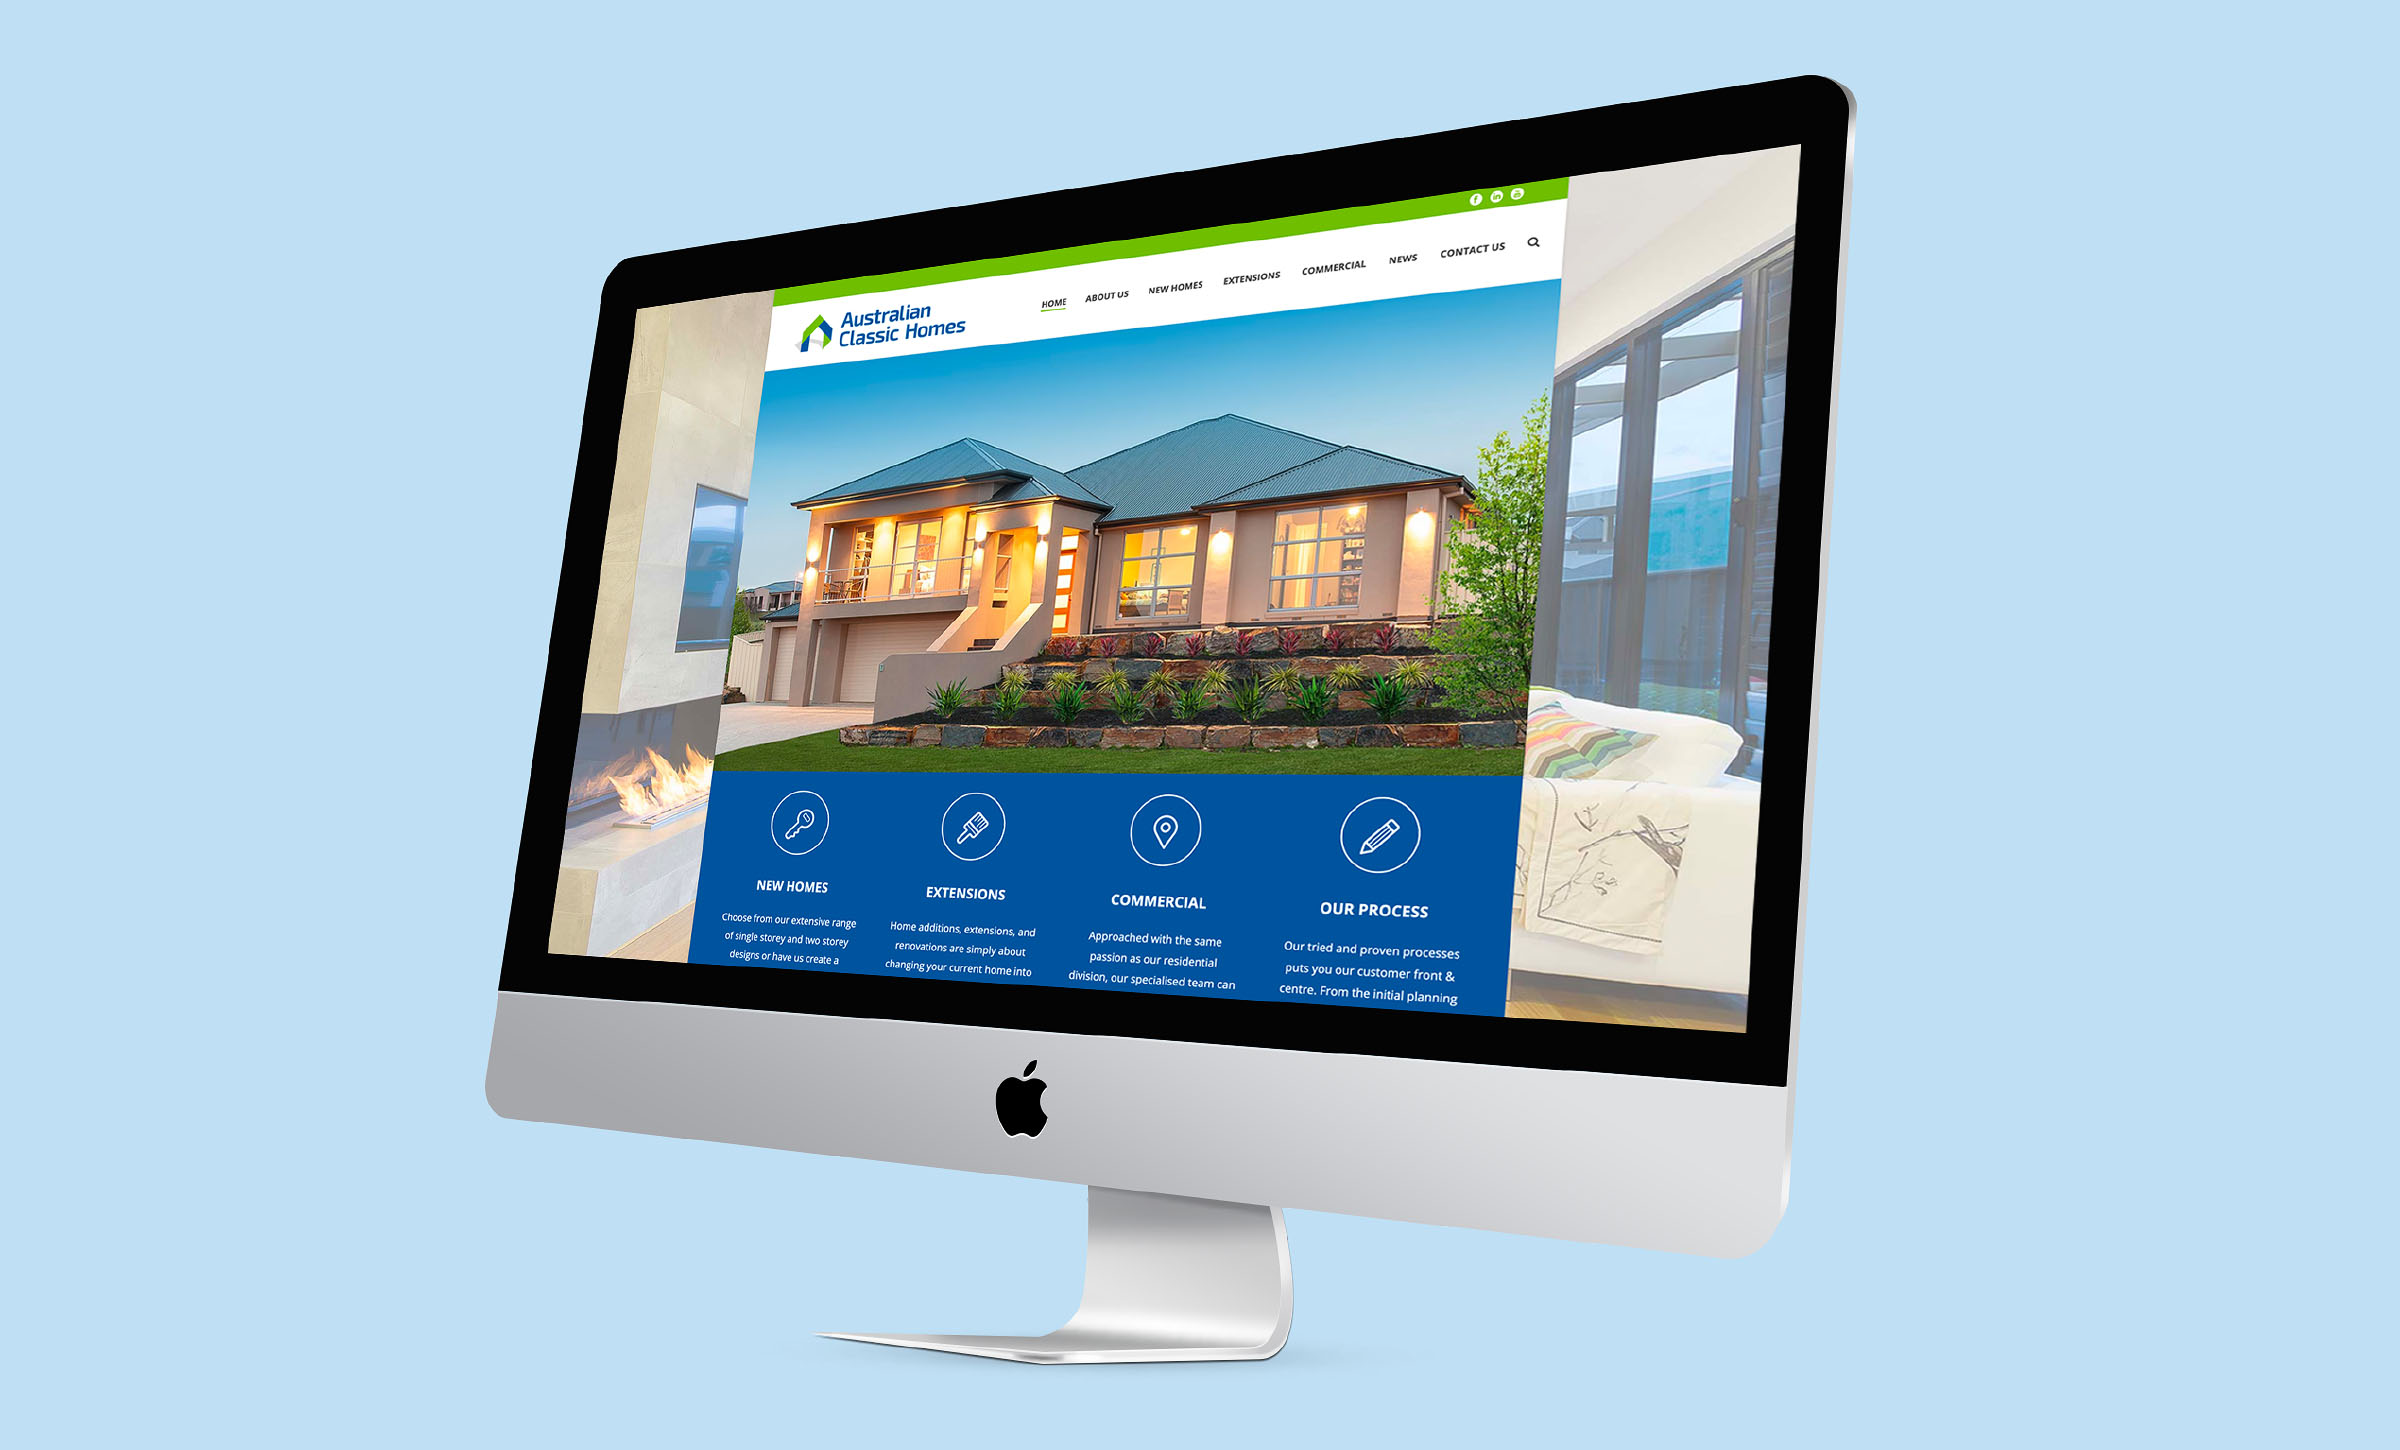 NRG Digital Australian Classic Homes Website Redevelopment